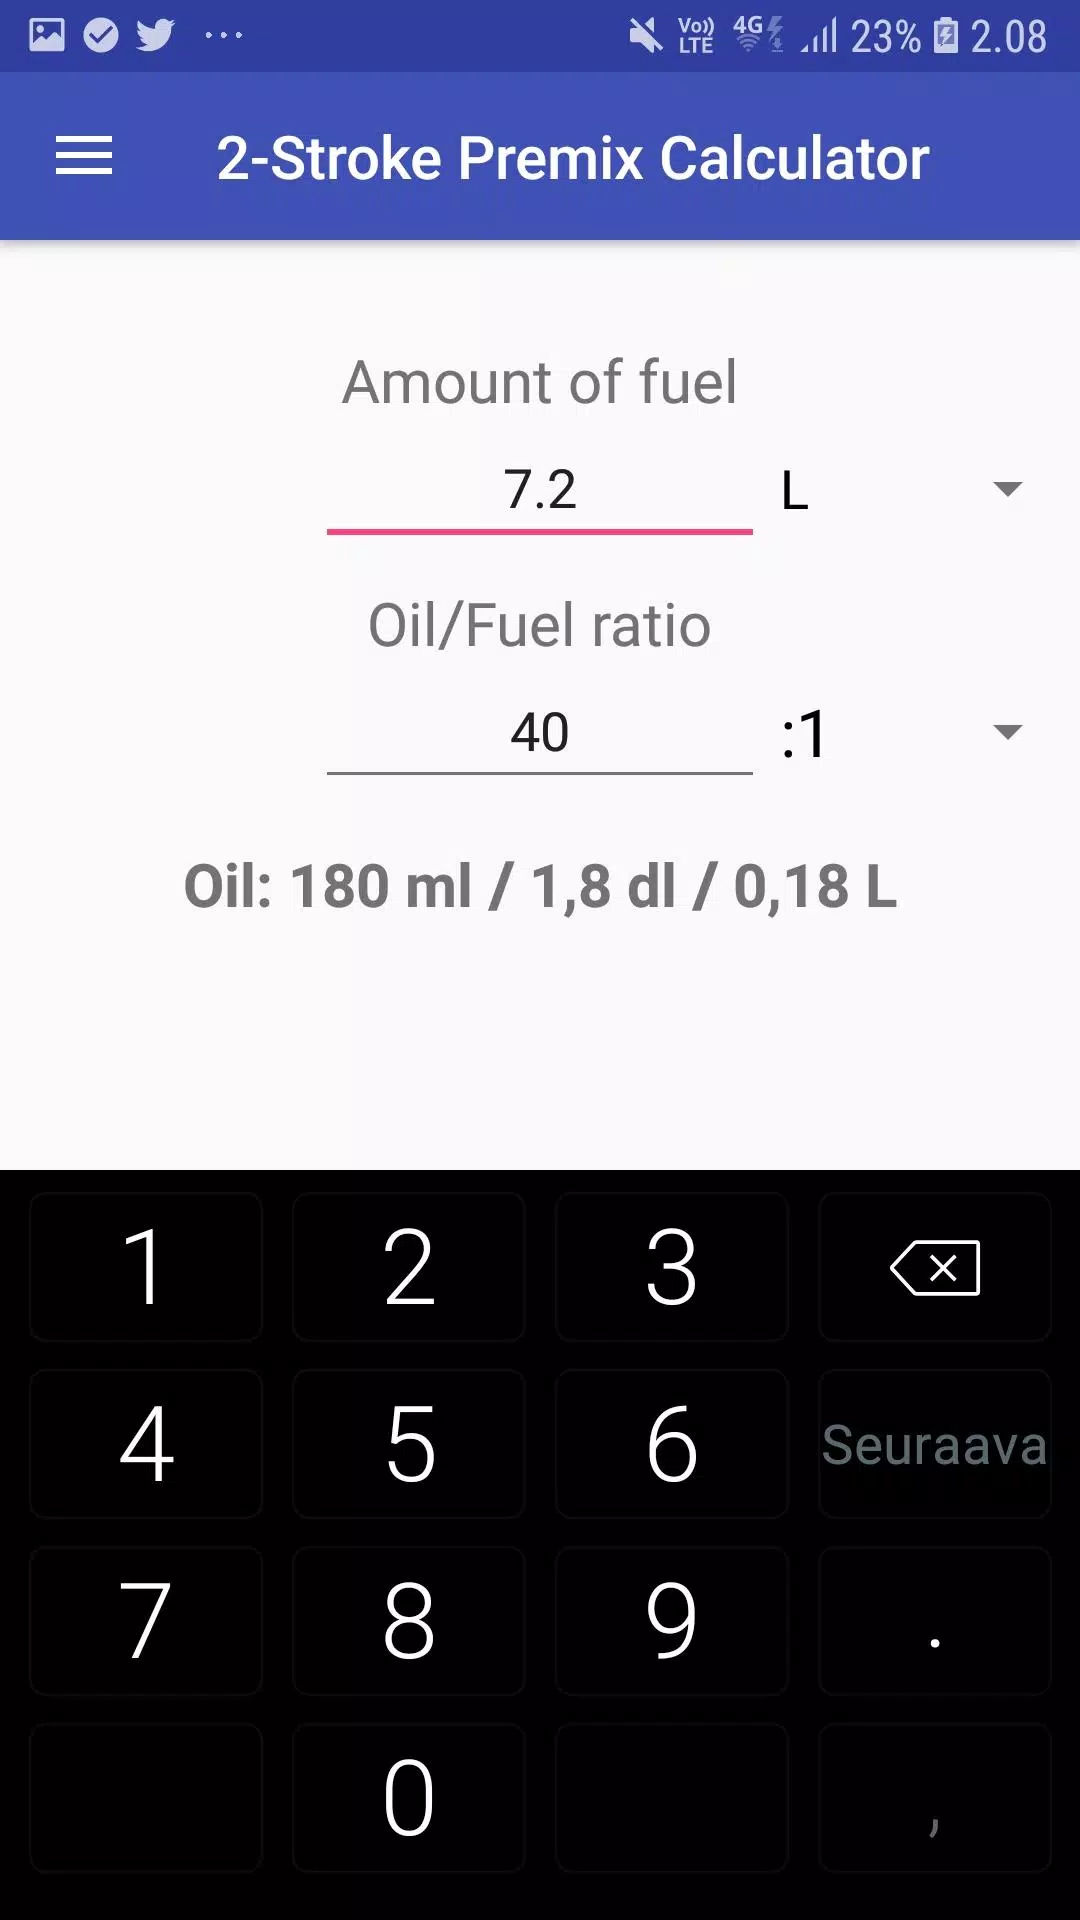 2-Stroke Premix Calculator APK for Android Download